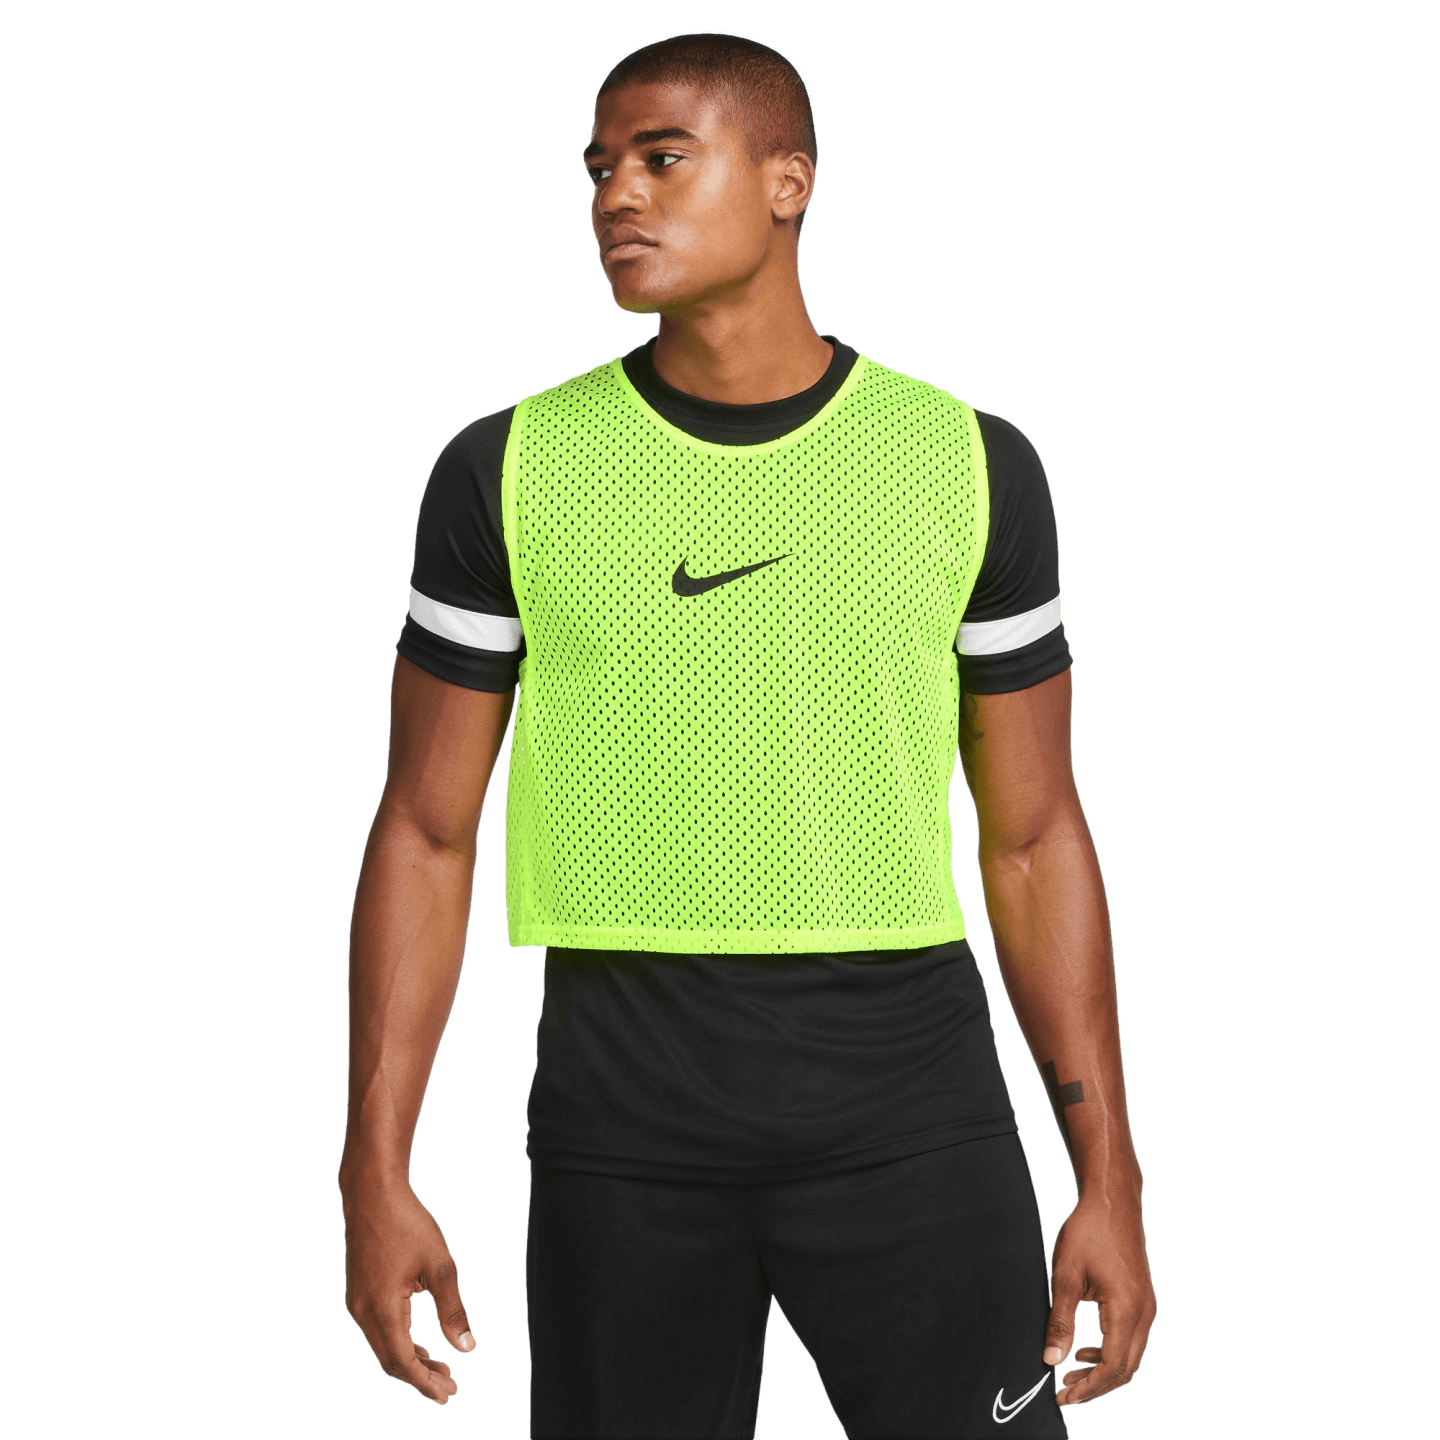 Nike Park 20 Training Bib Vest